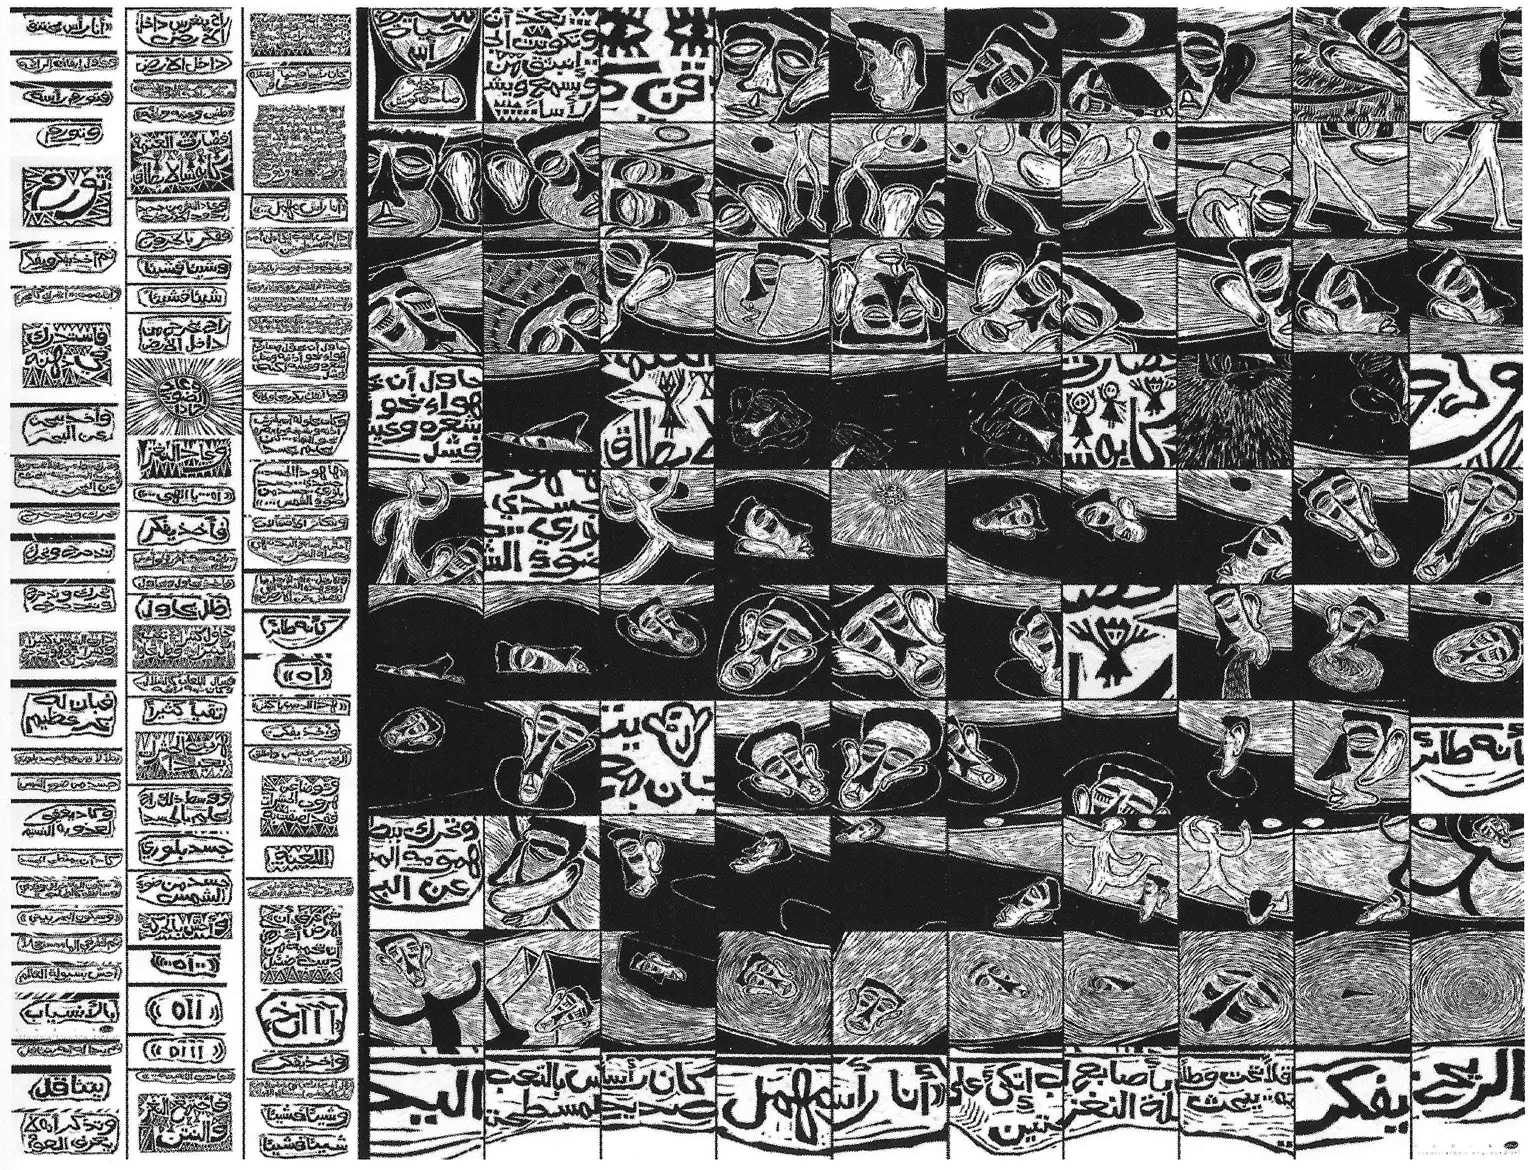 Alfraji, Sadik, Biography of a Head, animation video of linocut prints small